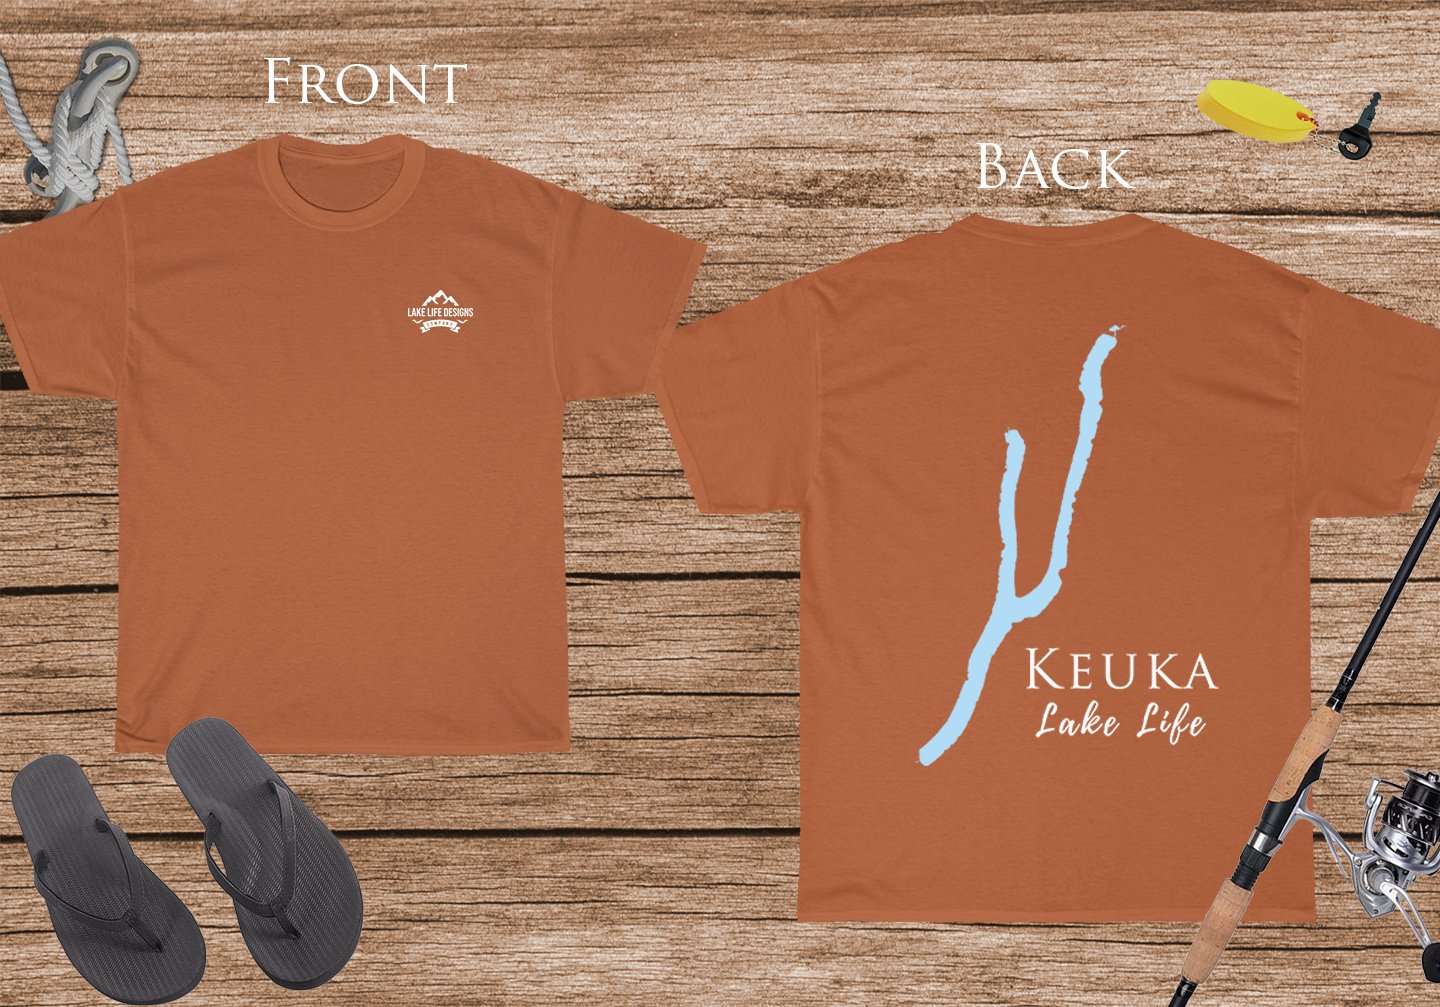 Keuka Lake Life - Cotton Short Sleeved - FRONT & BACK PRINTED - Short Sleeved Cotton Tee - New York Lake